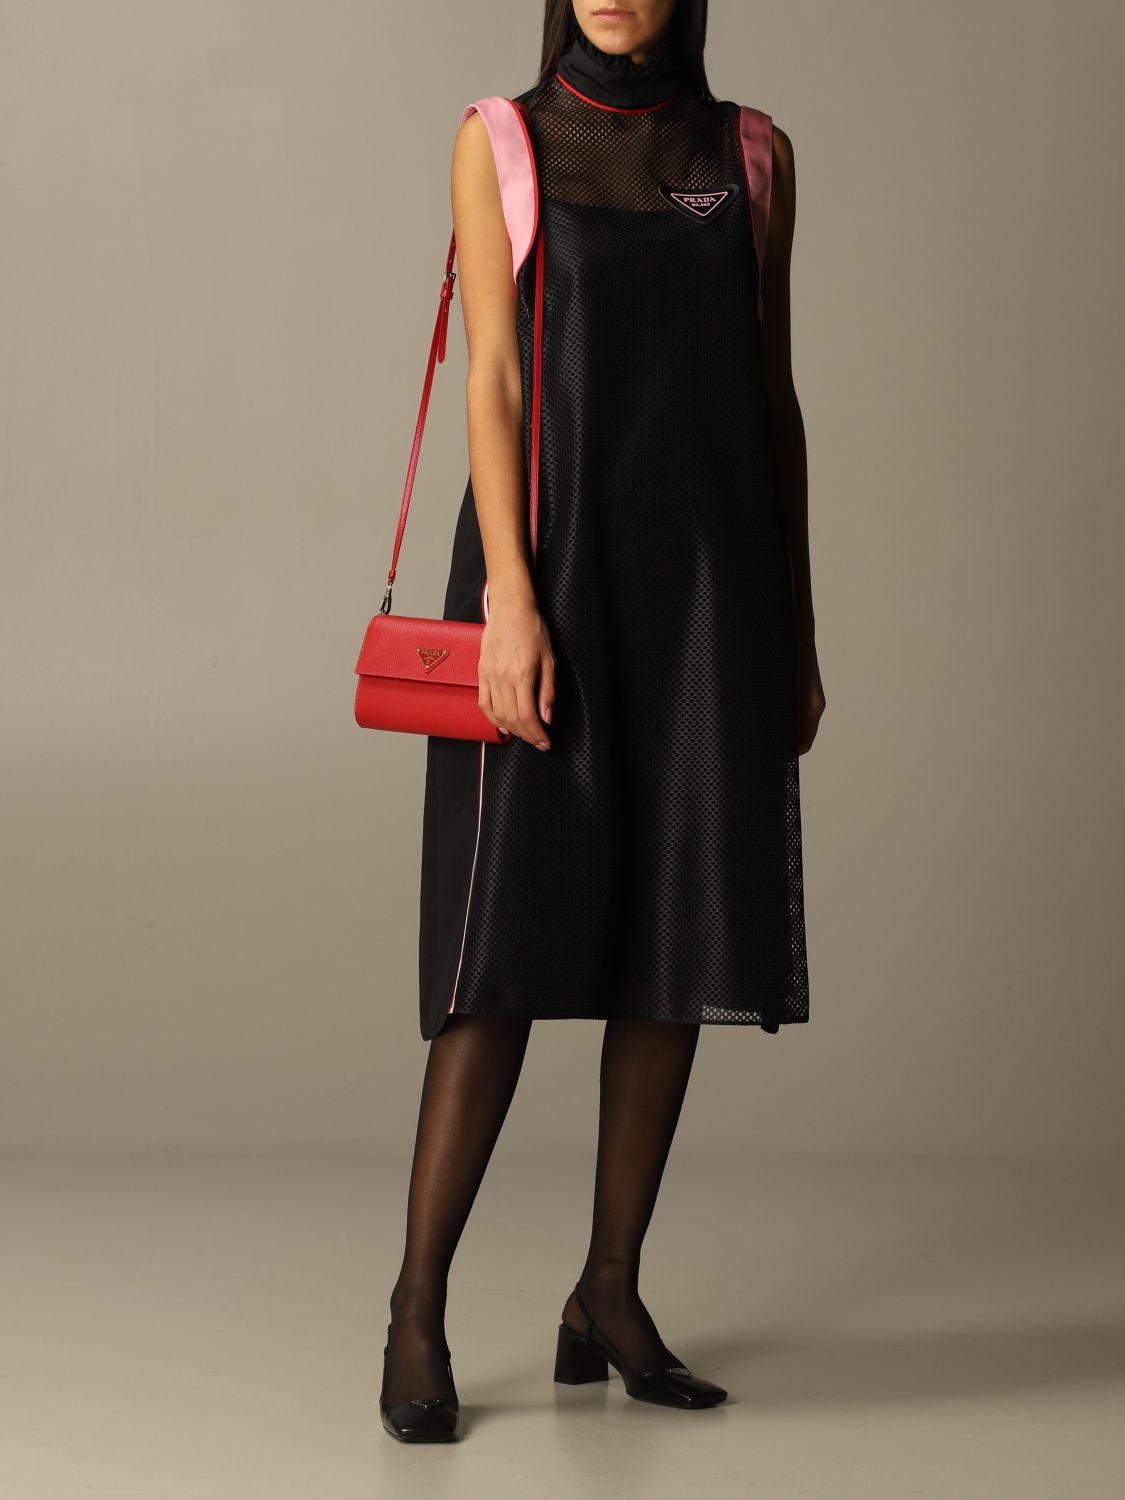 PRADA: shoulder bag in saffiano leather - Red  Prada mini bag 1MA022 053  online at